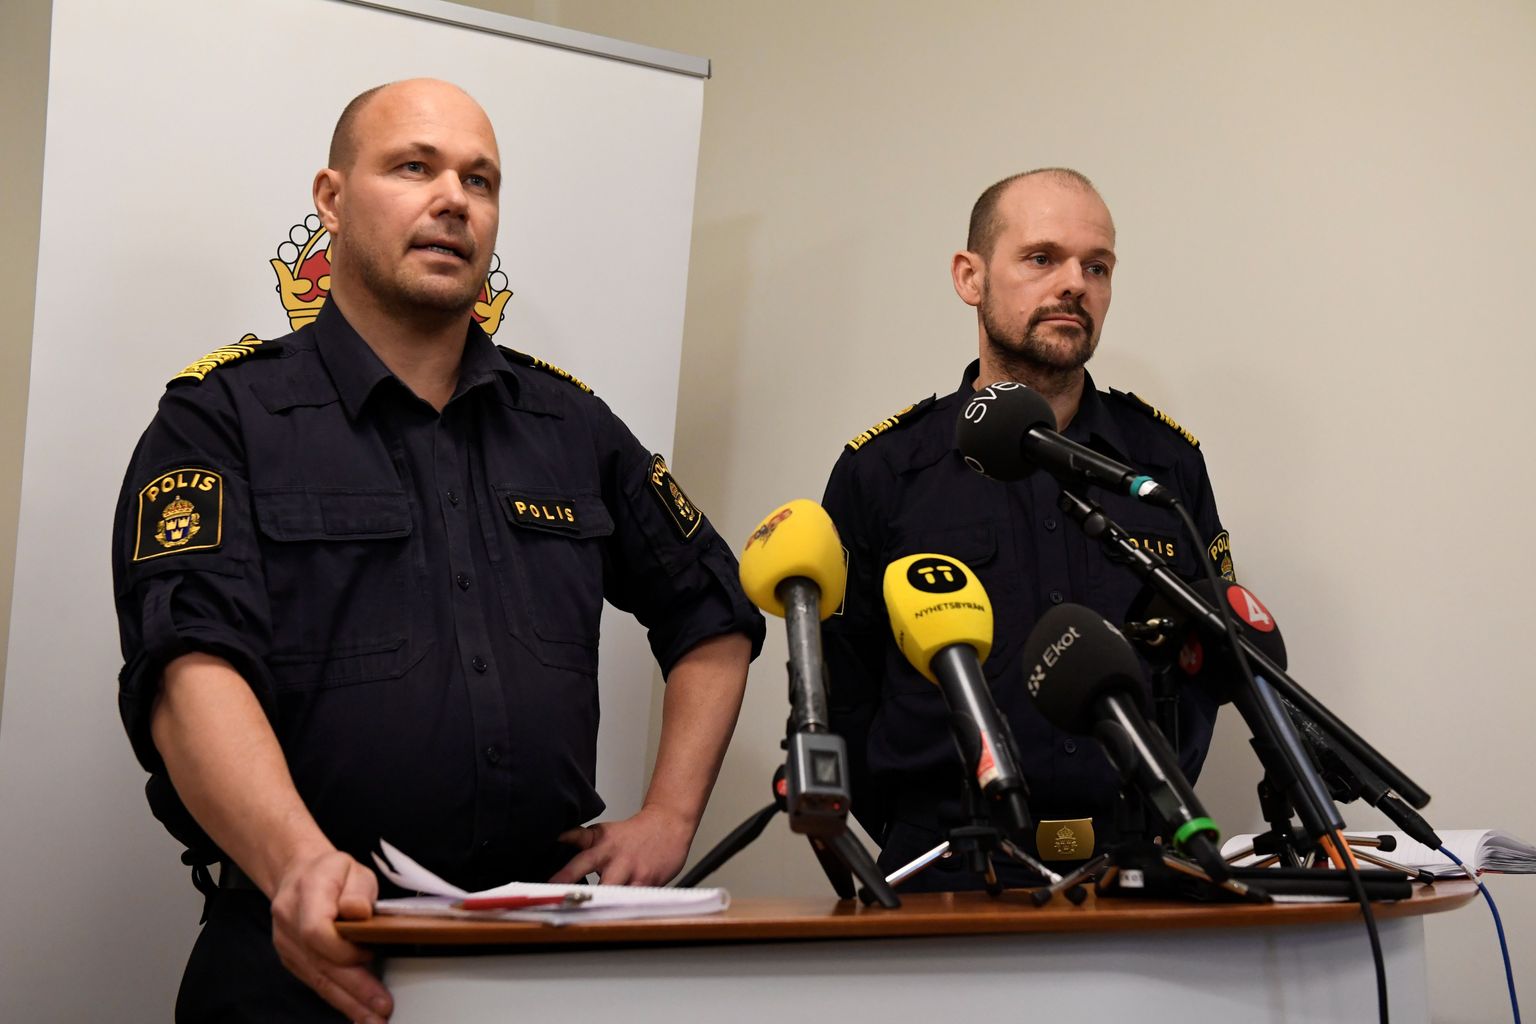 Rootsi politseijuhid Ulf Johansson (vasakul) ja Patrik Ungsäter pressikonverentsil